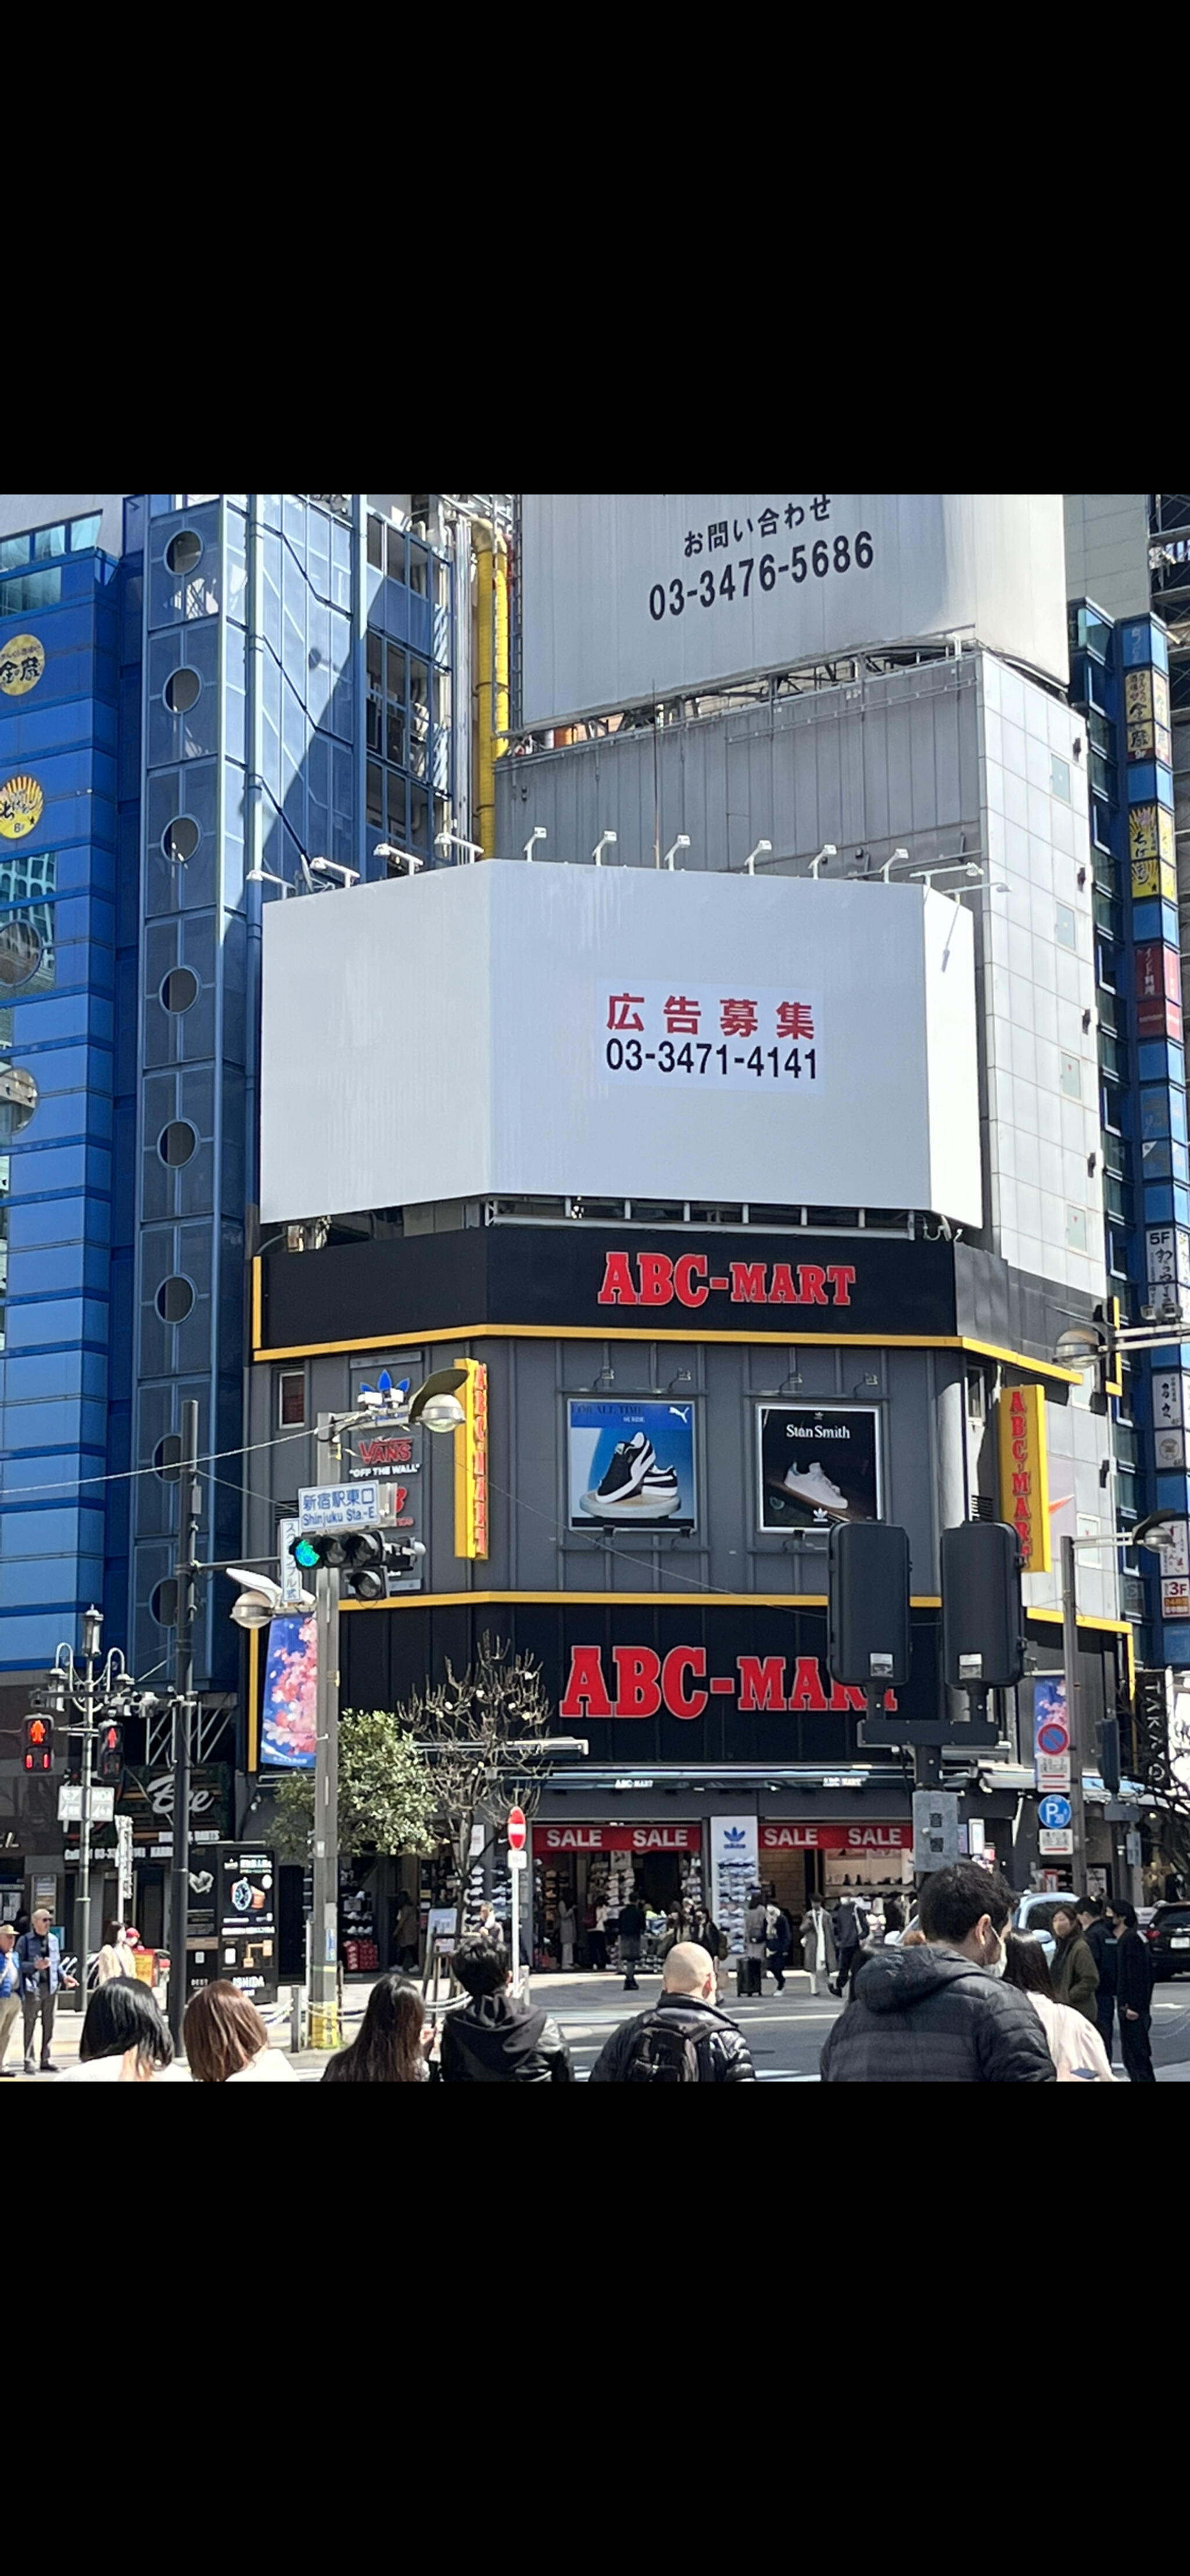 ABCマート 新宿本店の代表写真4